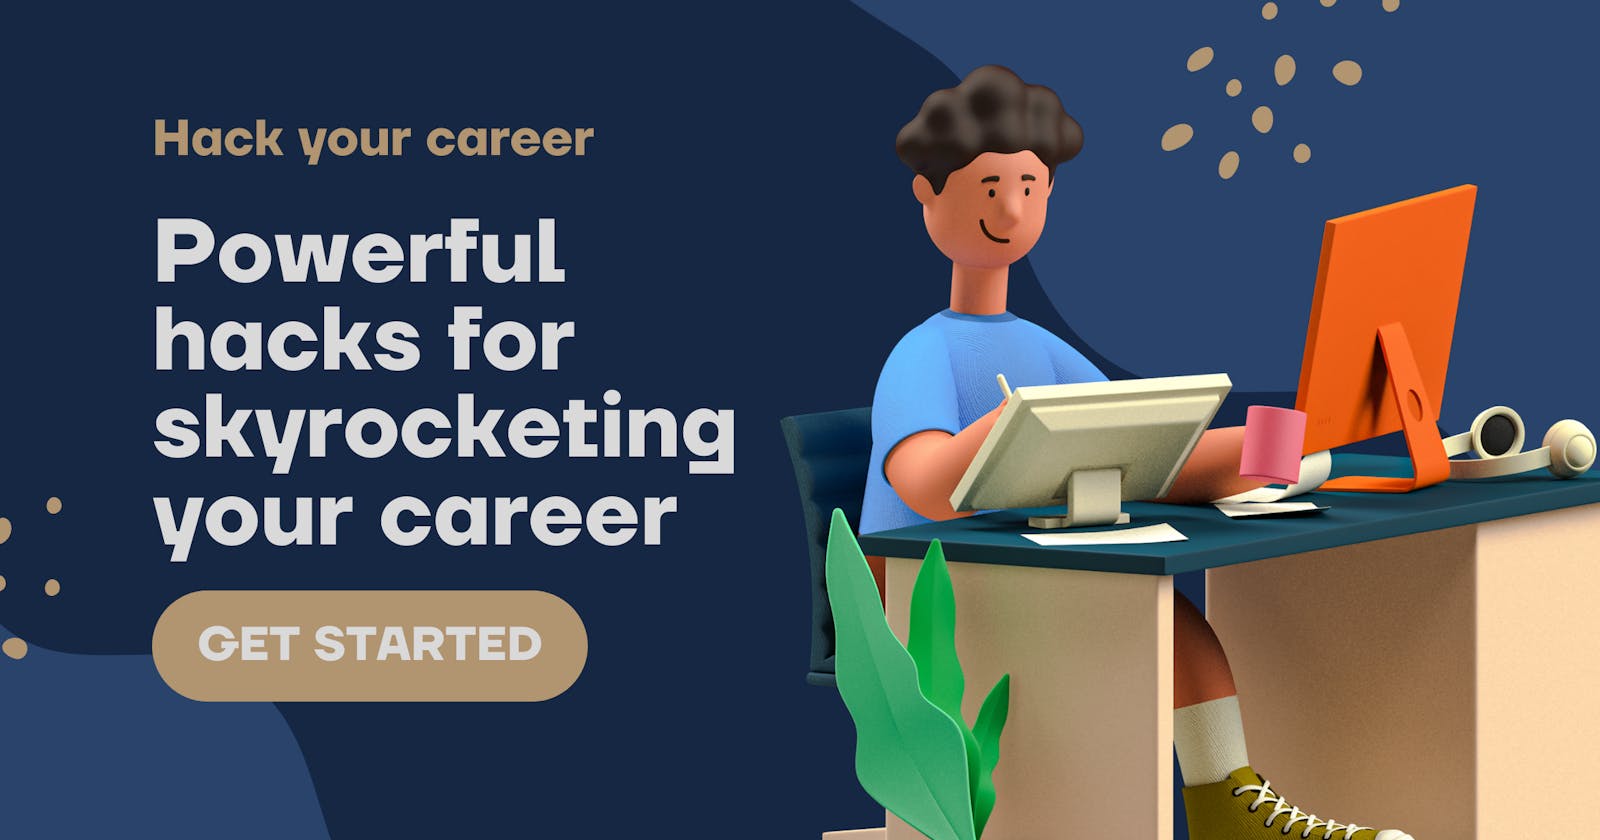 7 Powerful hacks for skyrocketing your career in 2022.